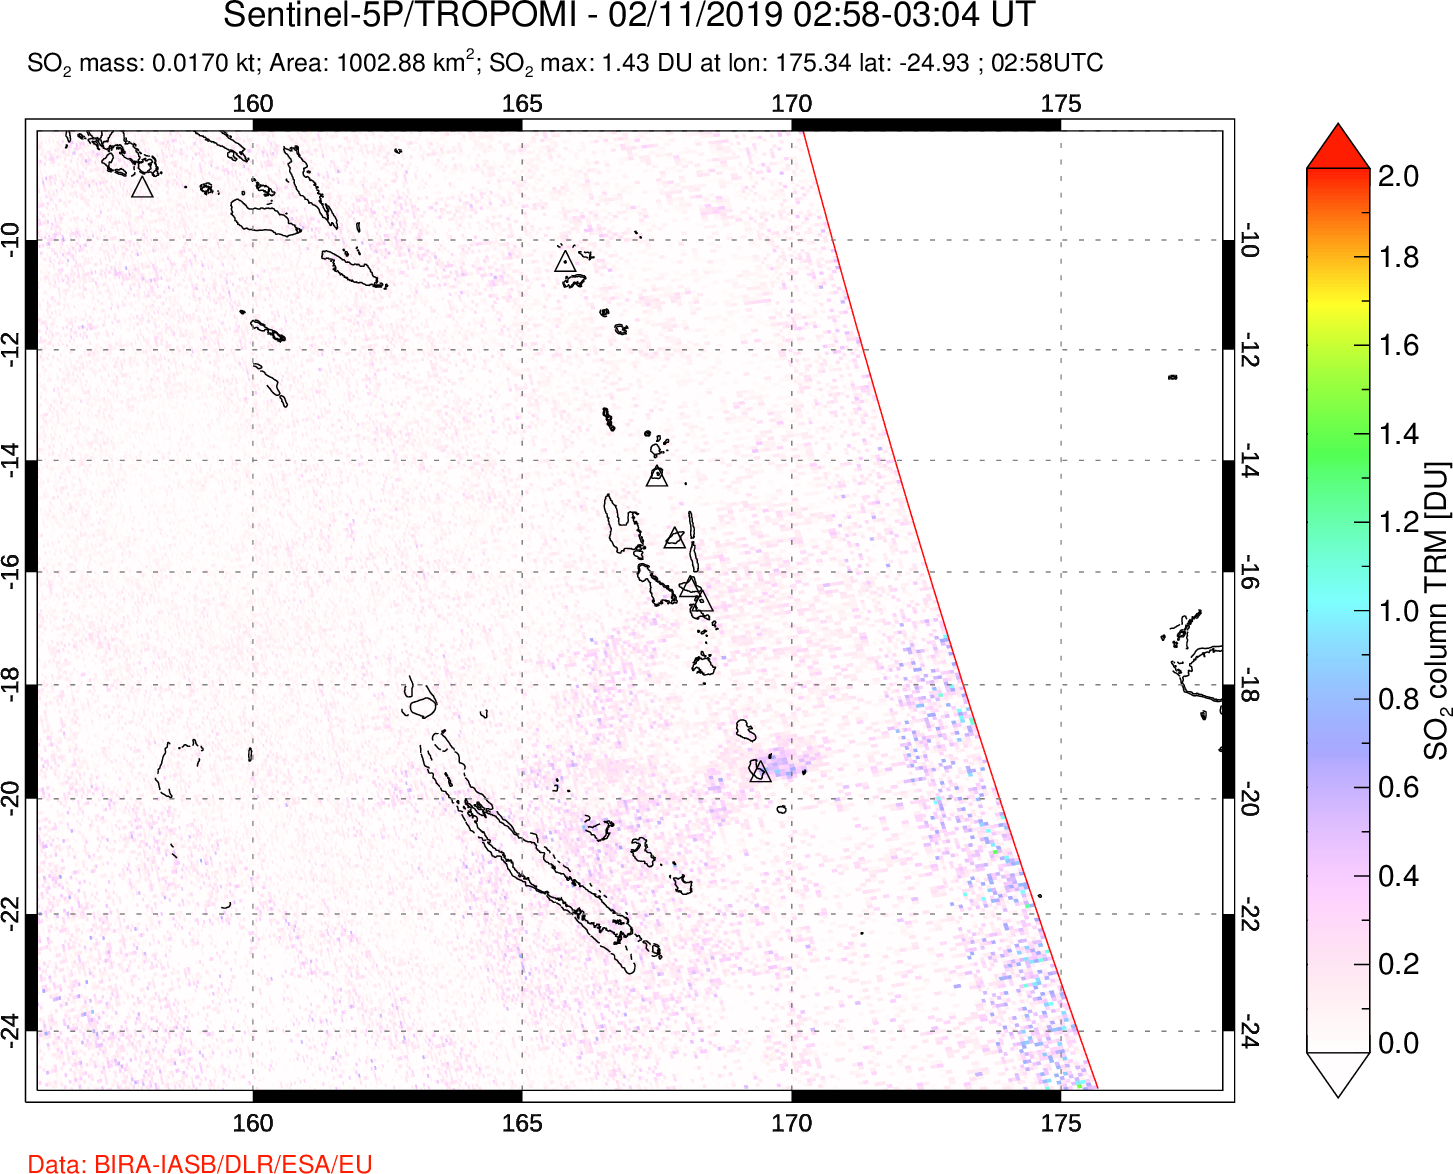 A sulfur dioxide image over Vanuatu, South Pacific on Feb 11, 2019.